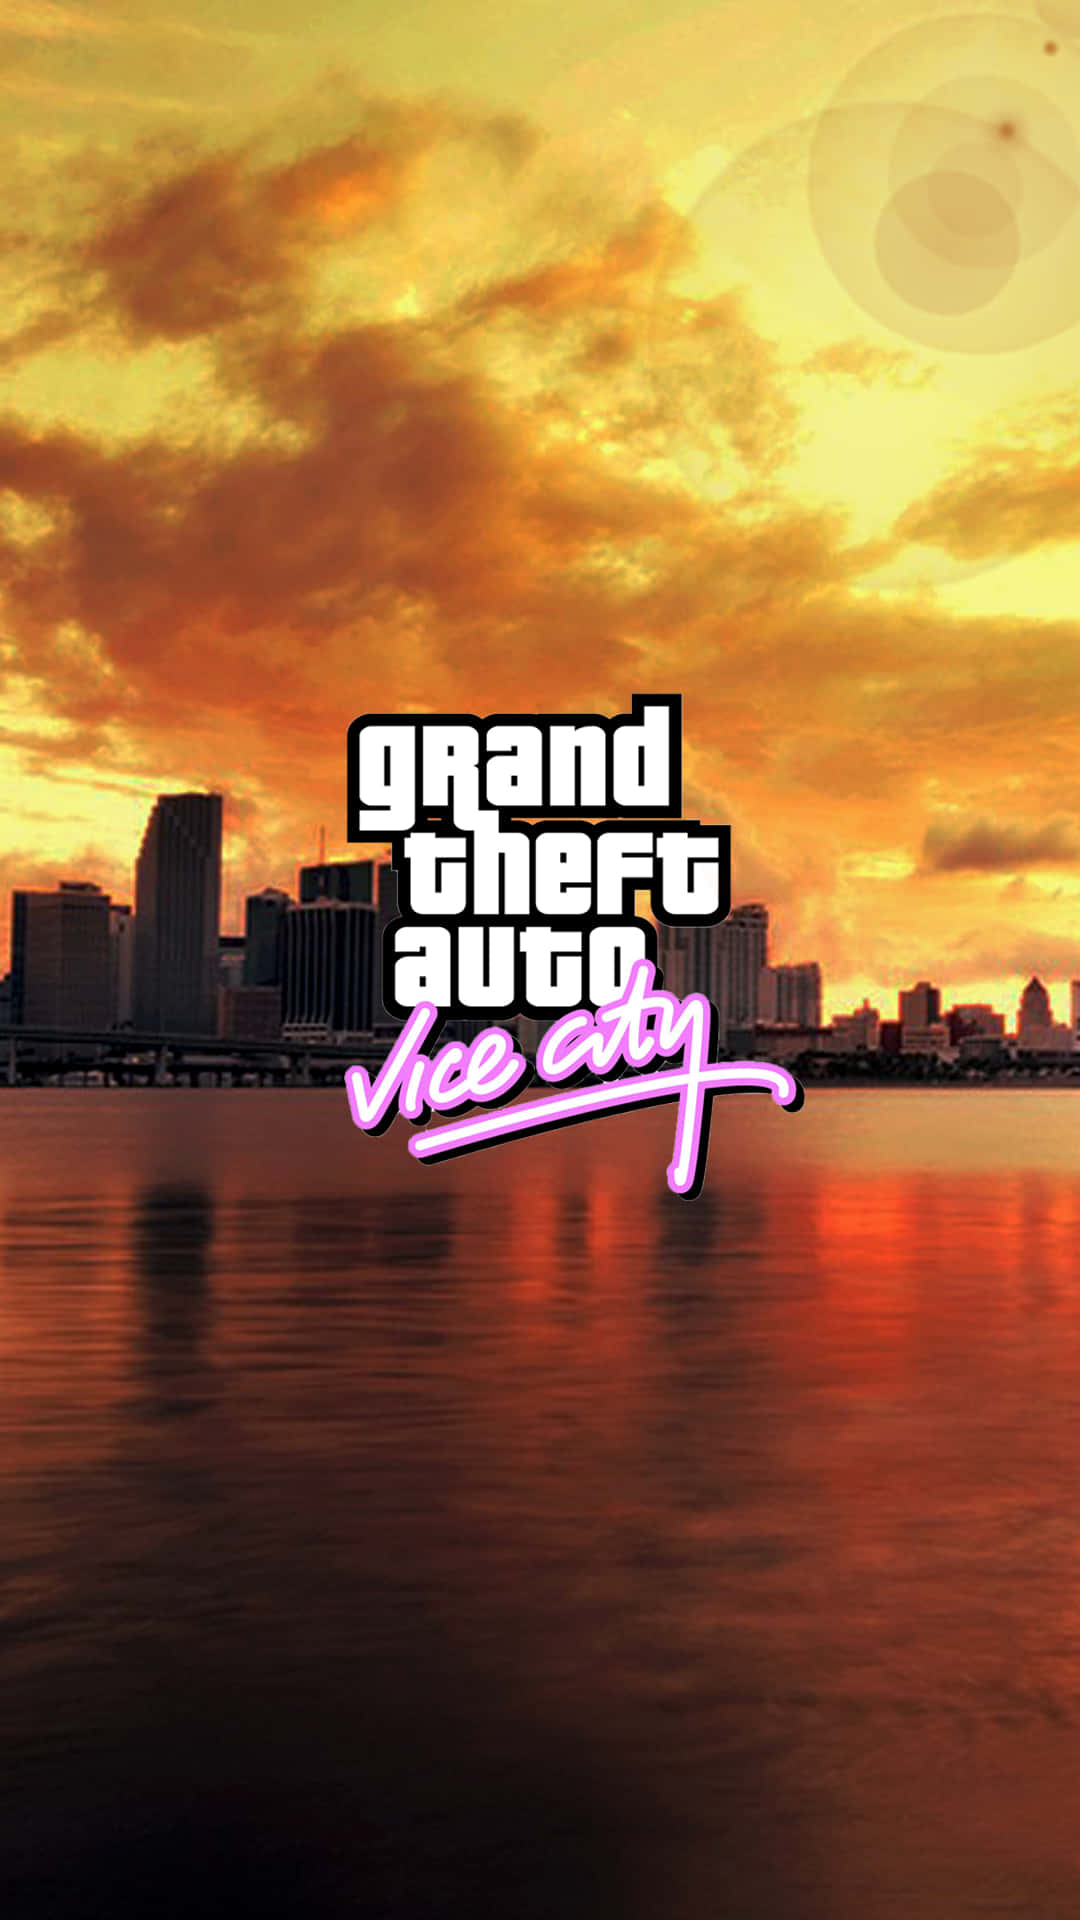 Gta Background Grand Theft Auto Vice City Beach Background